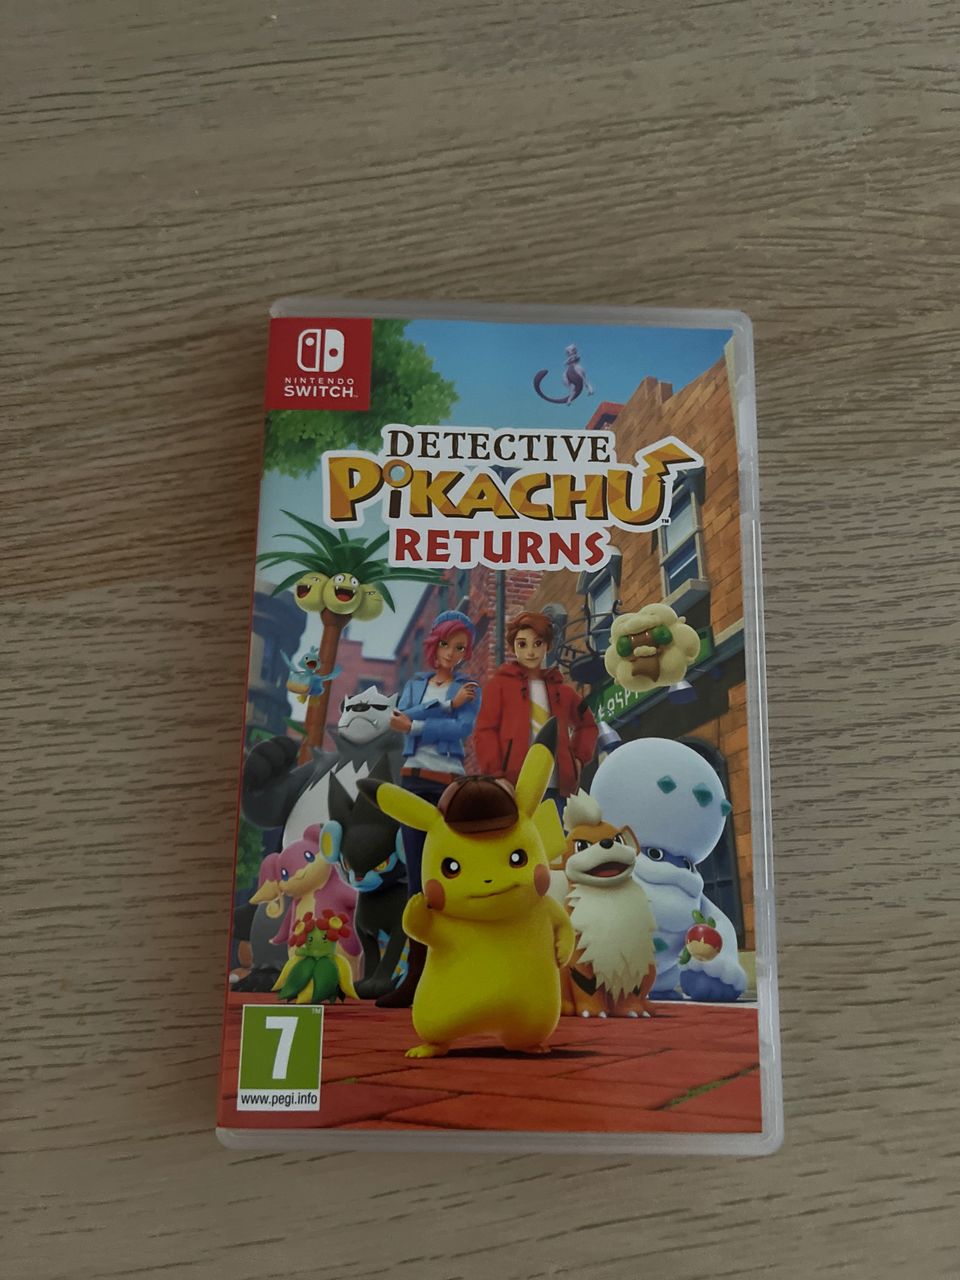 Detective pikachu returns